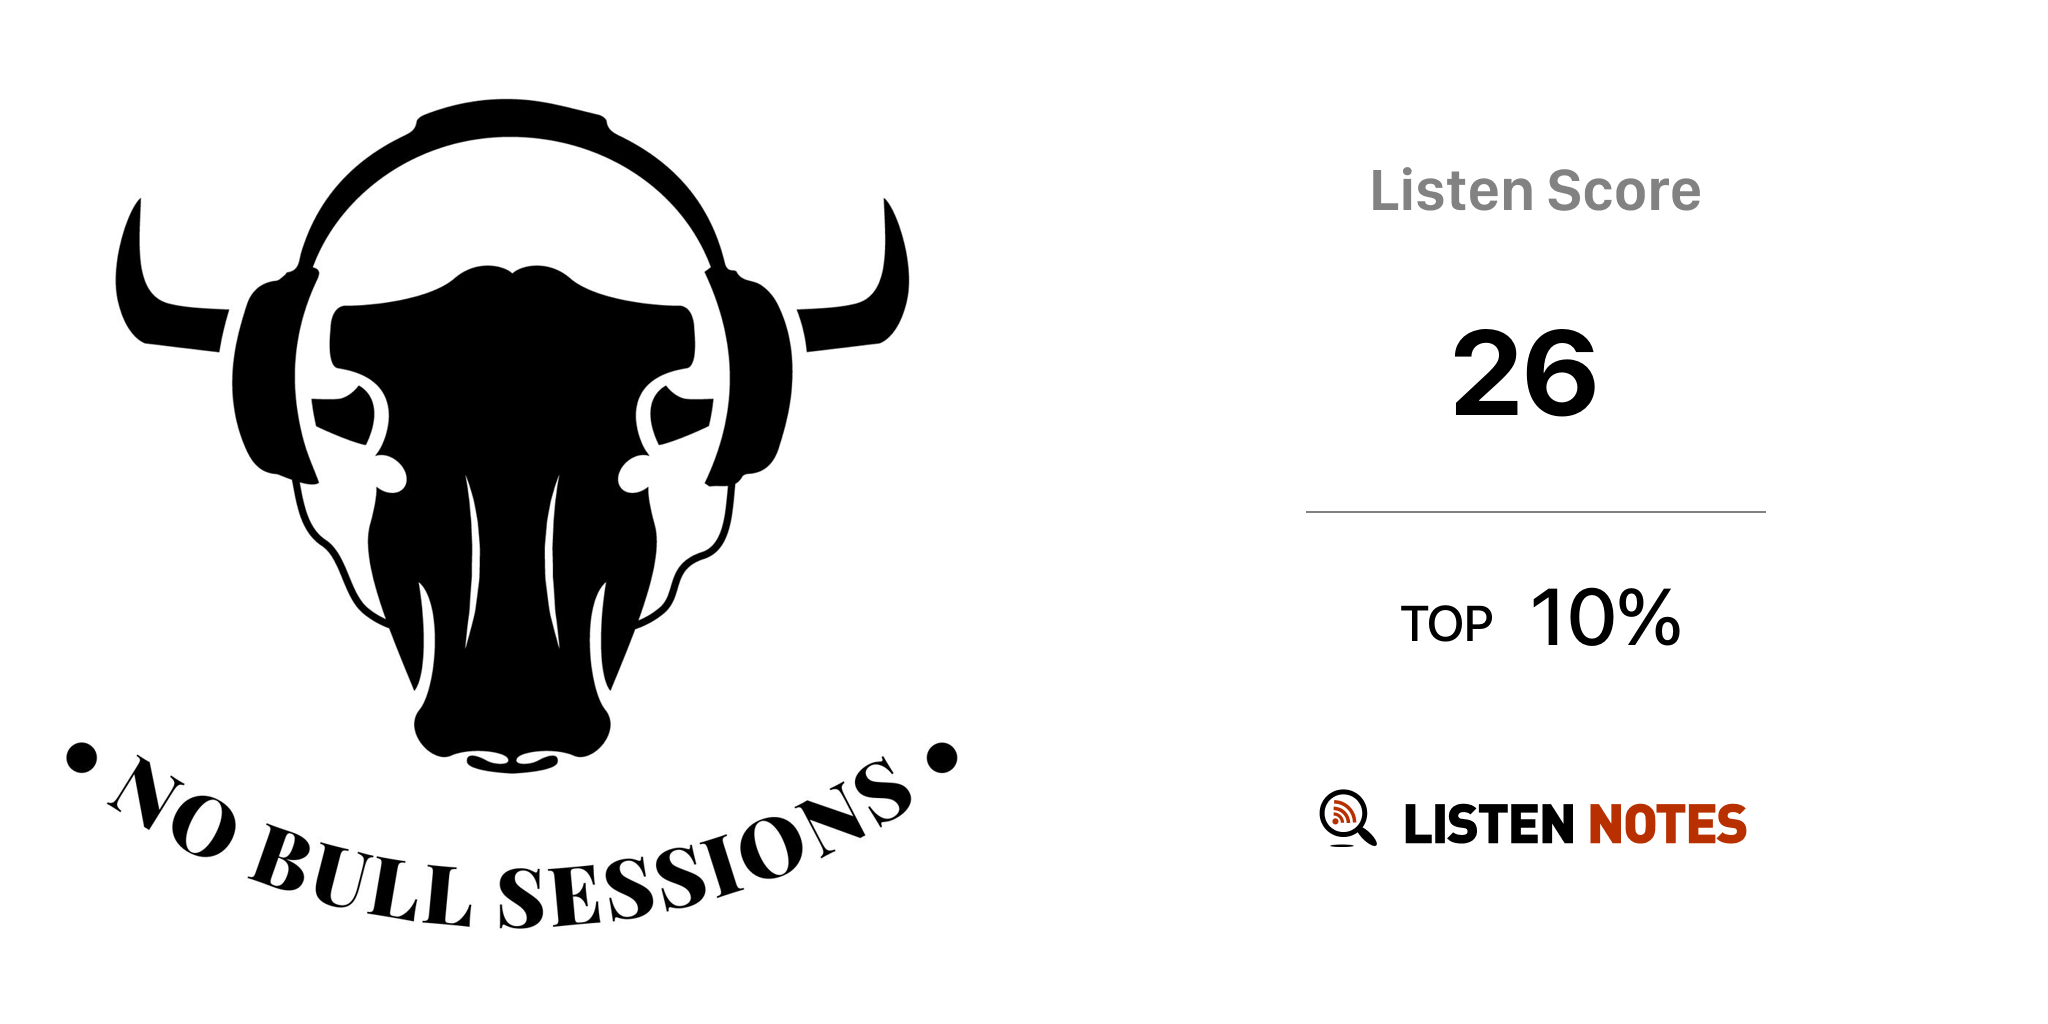 No Bull Sessions (podcast) Richard Bull Listen Notes